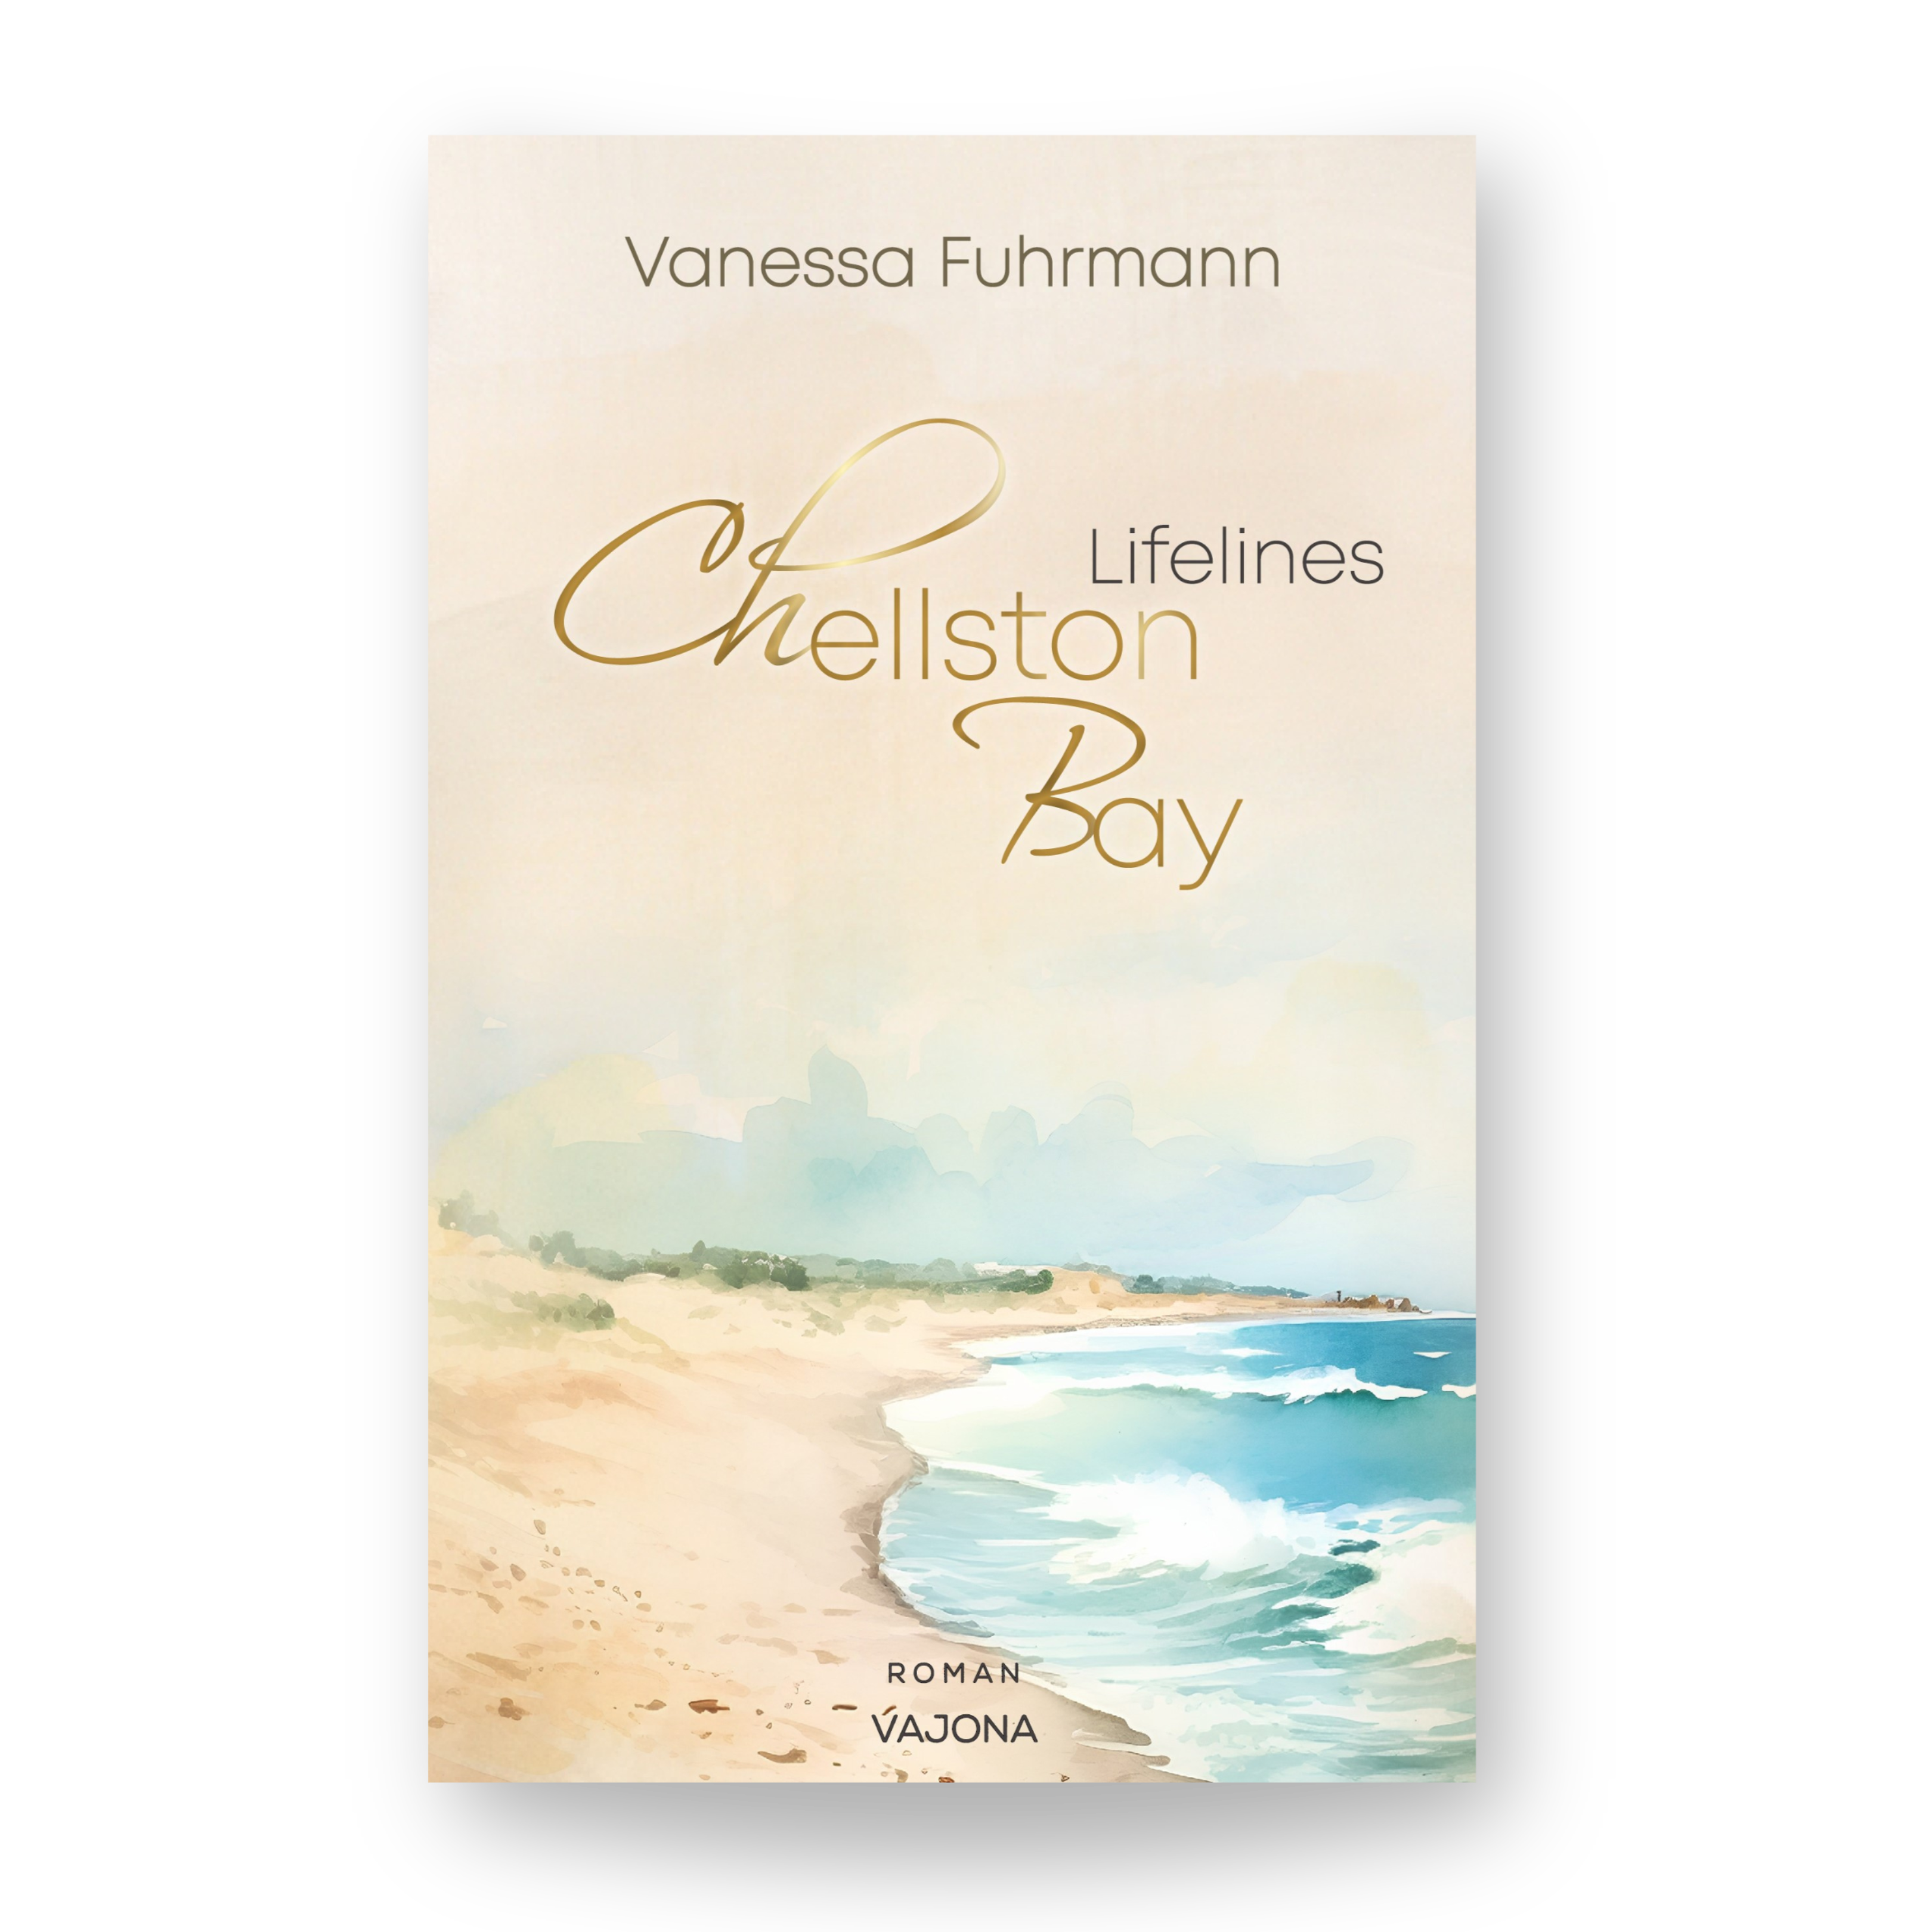 Chellston Bay - Lifeline